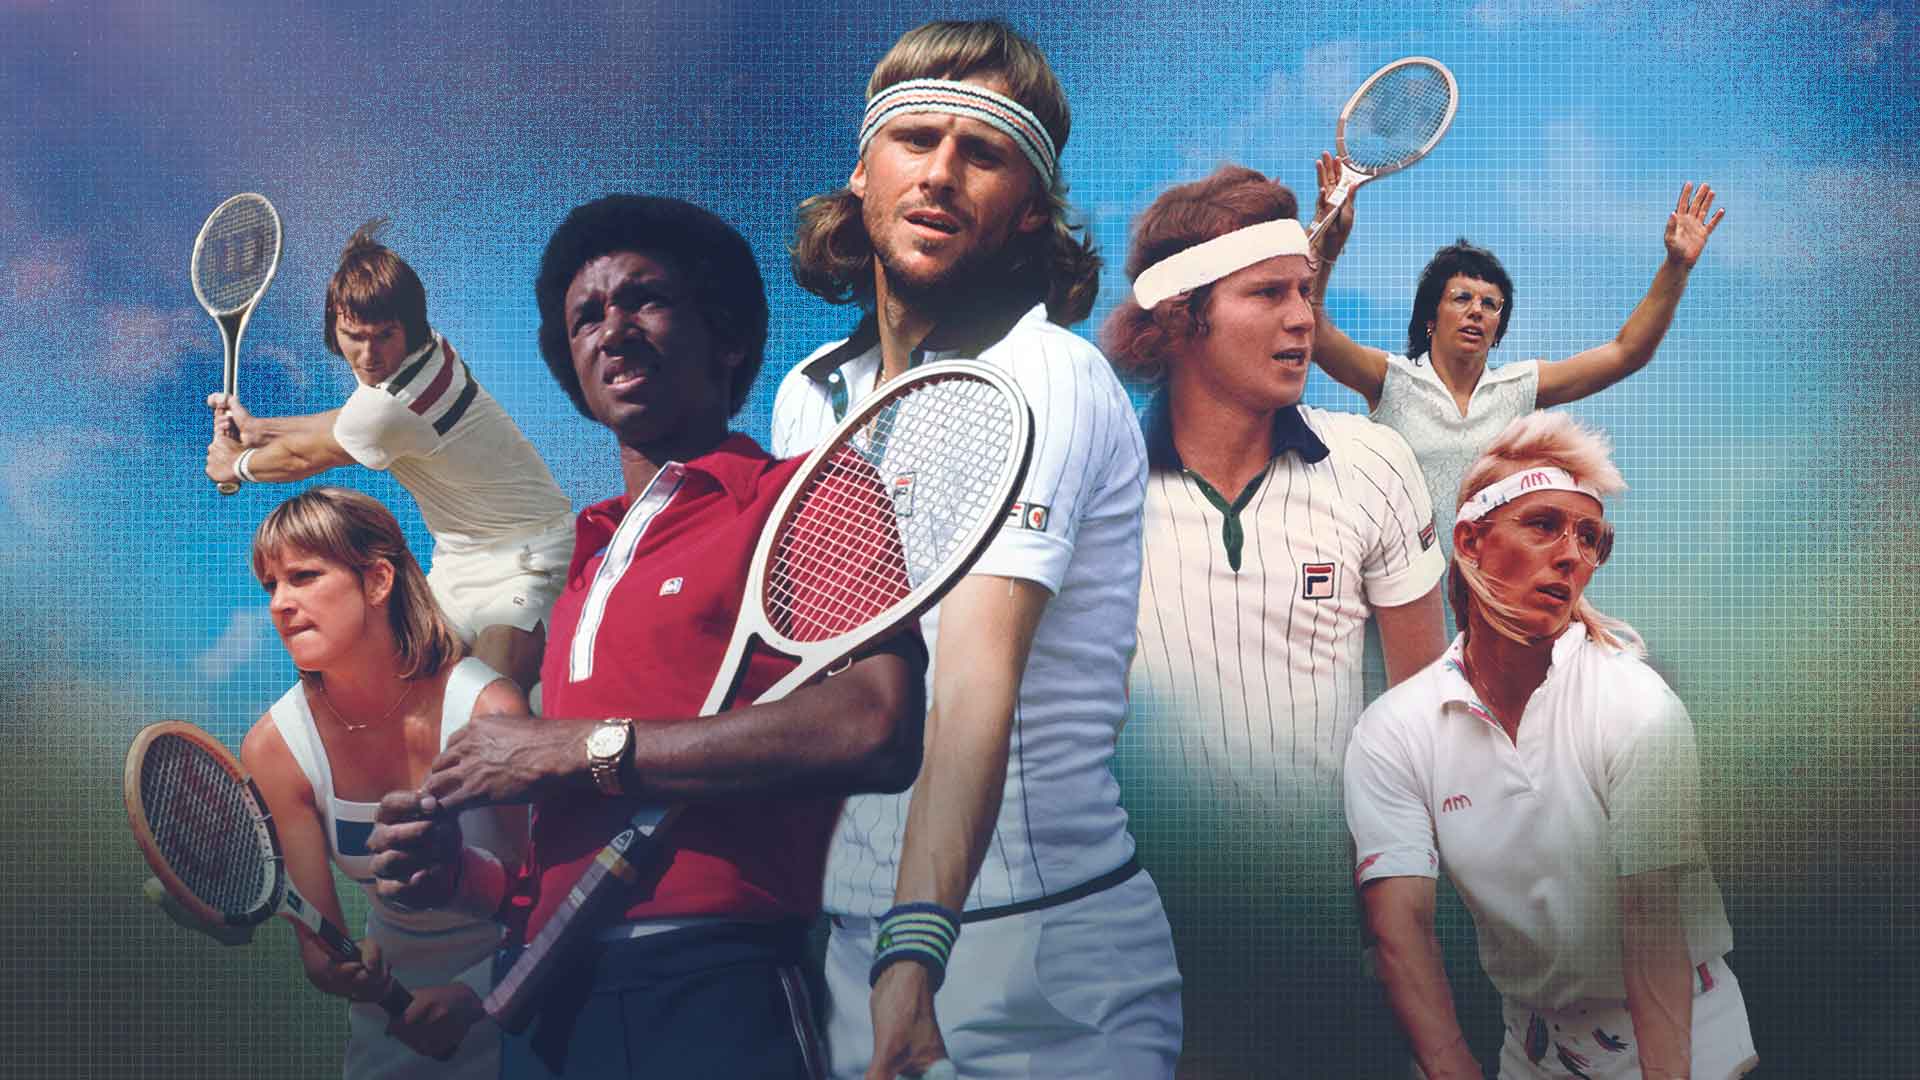 Collage of famous tennis players including Bjorn Borg, Arthur Ashe, Billy Jean King, John McEnroe, Martina Navratilova, and others.